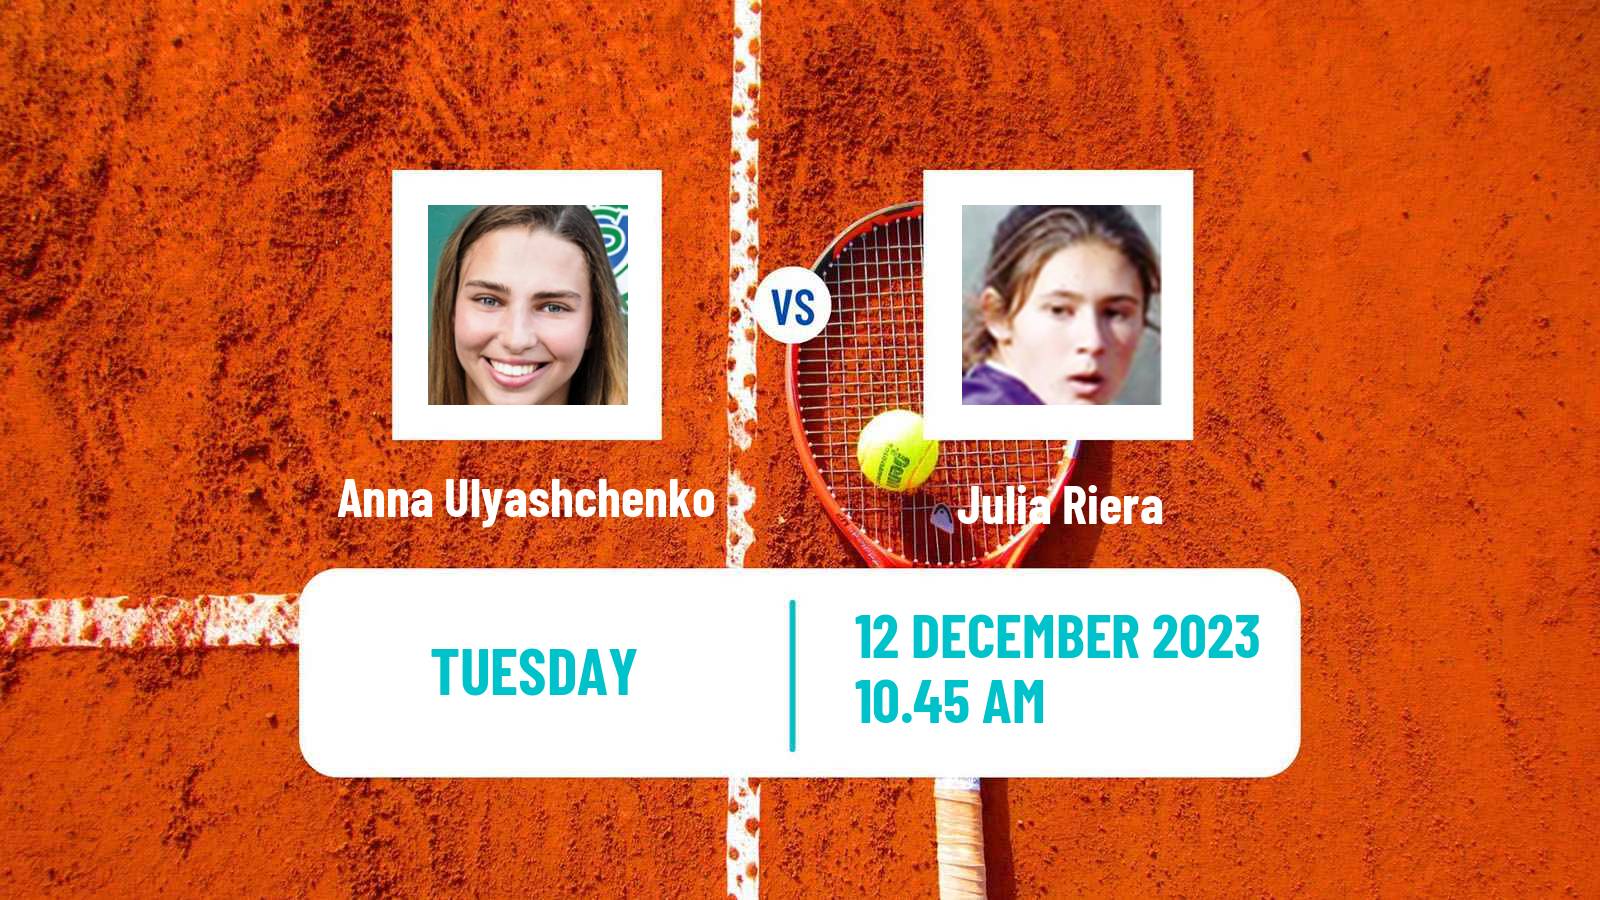 Tennis ITF W60 Vacaria Women Anna Ulyashchenko - Julia Riera